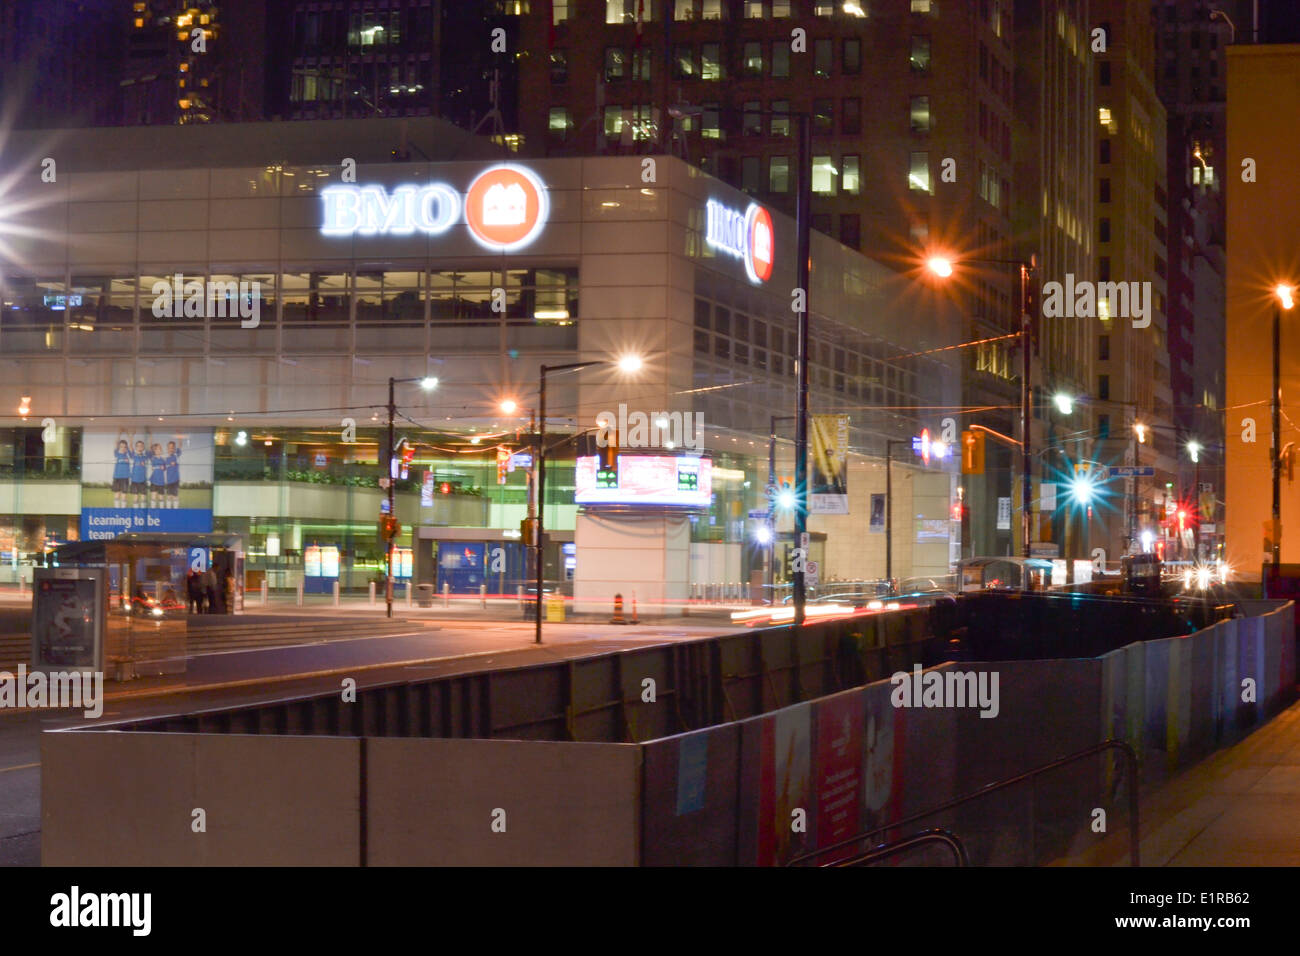 Bmo Bank In Downtown Toronto Canada Stock Photo 69969818 Alamy